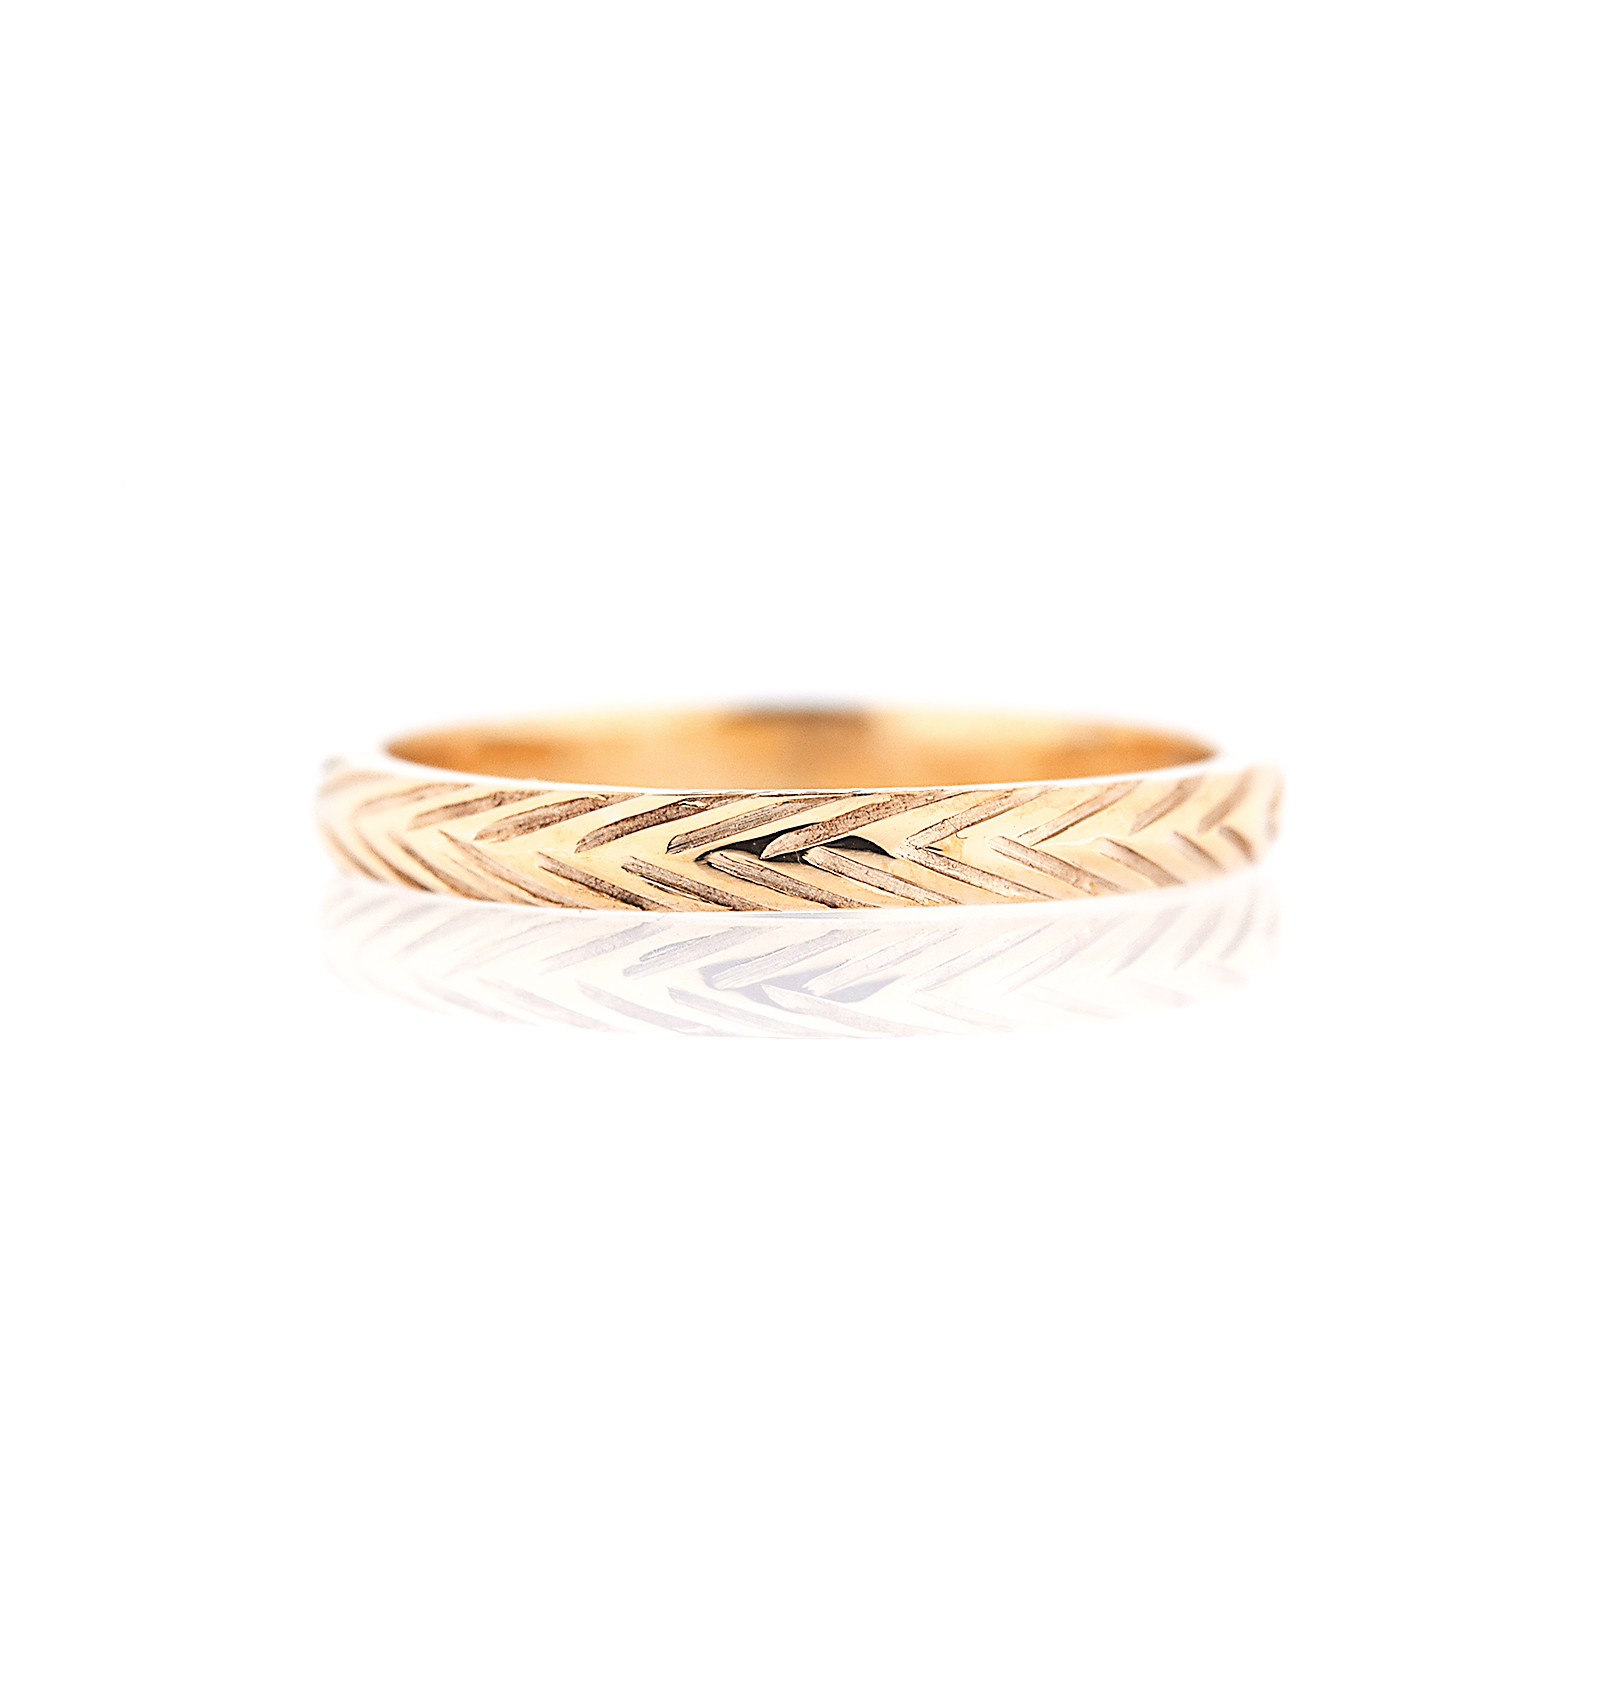 2mm width wheat wedding ring